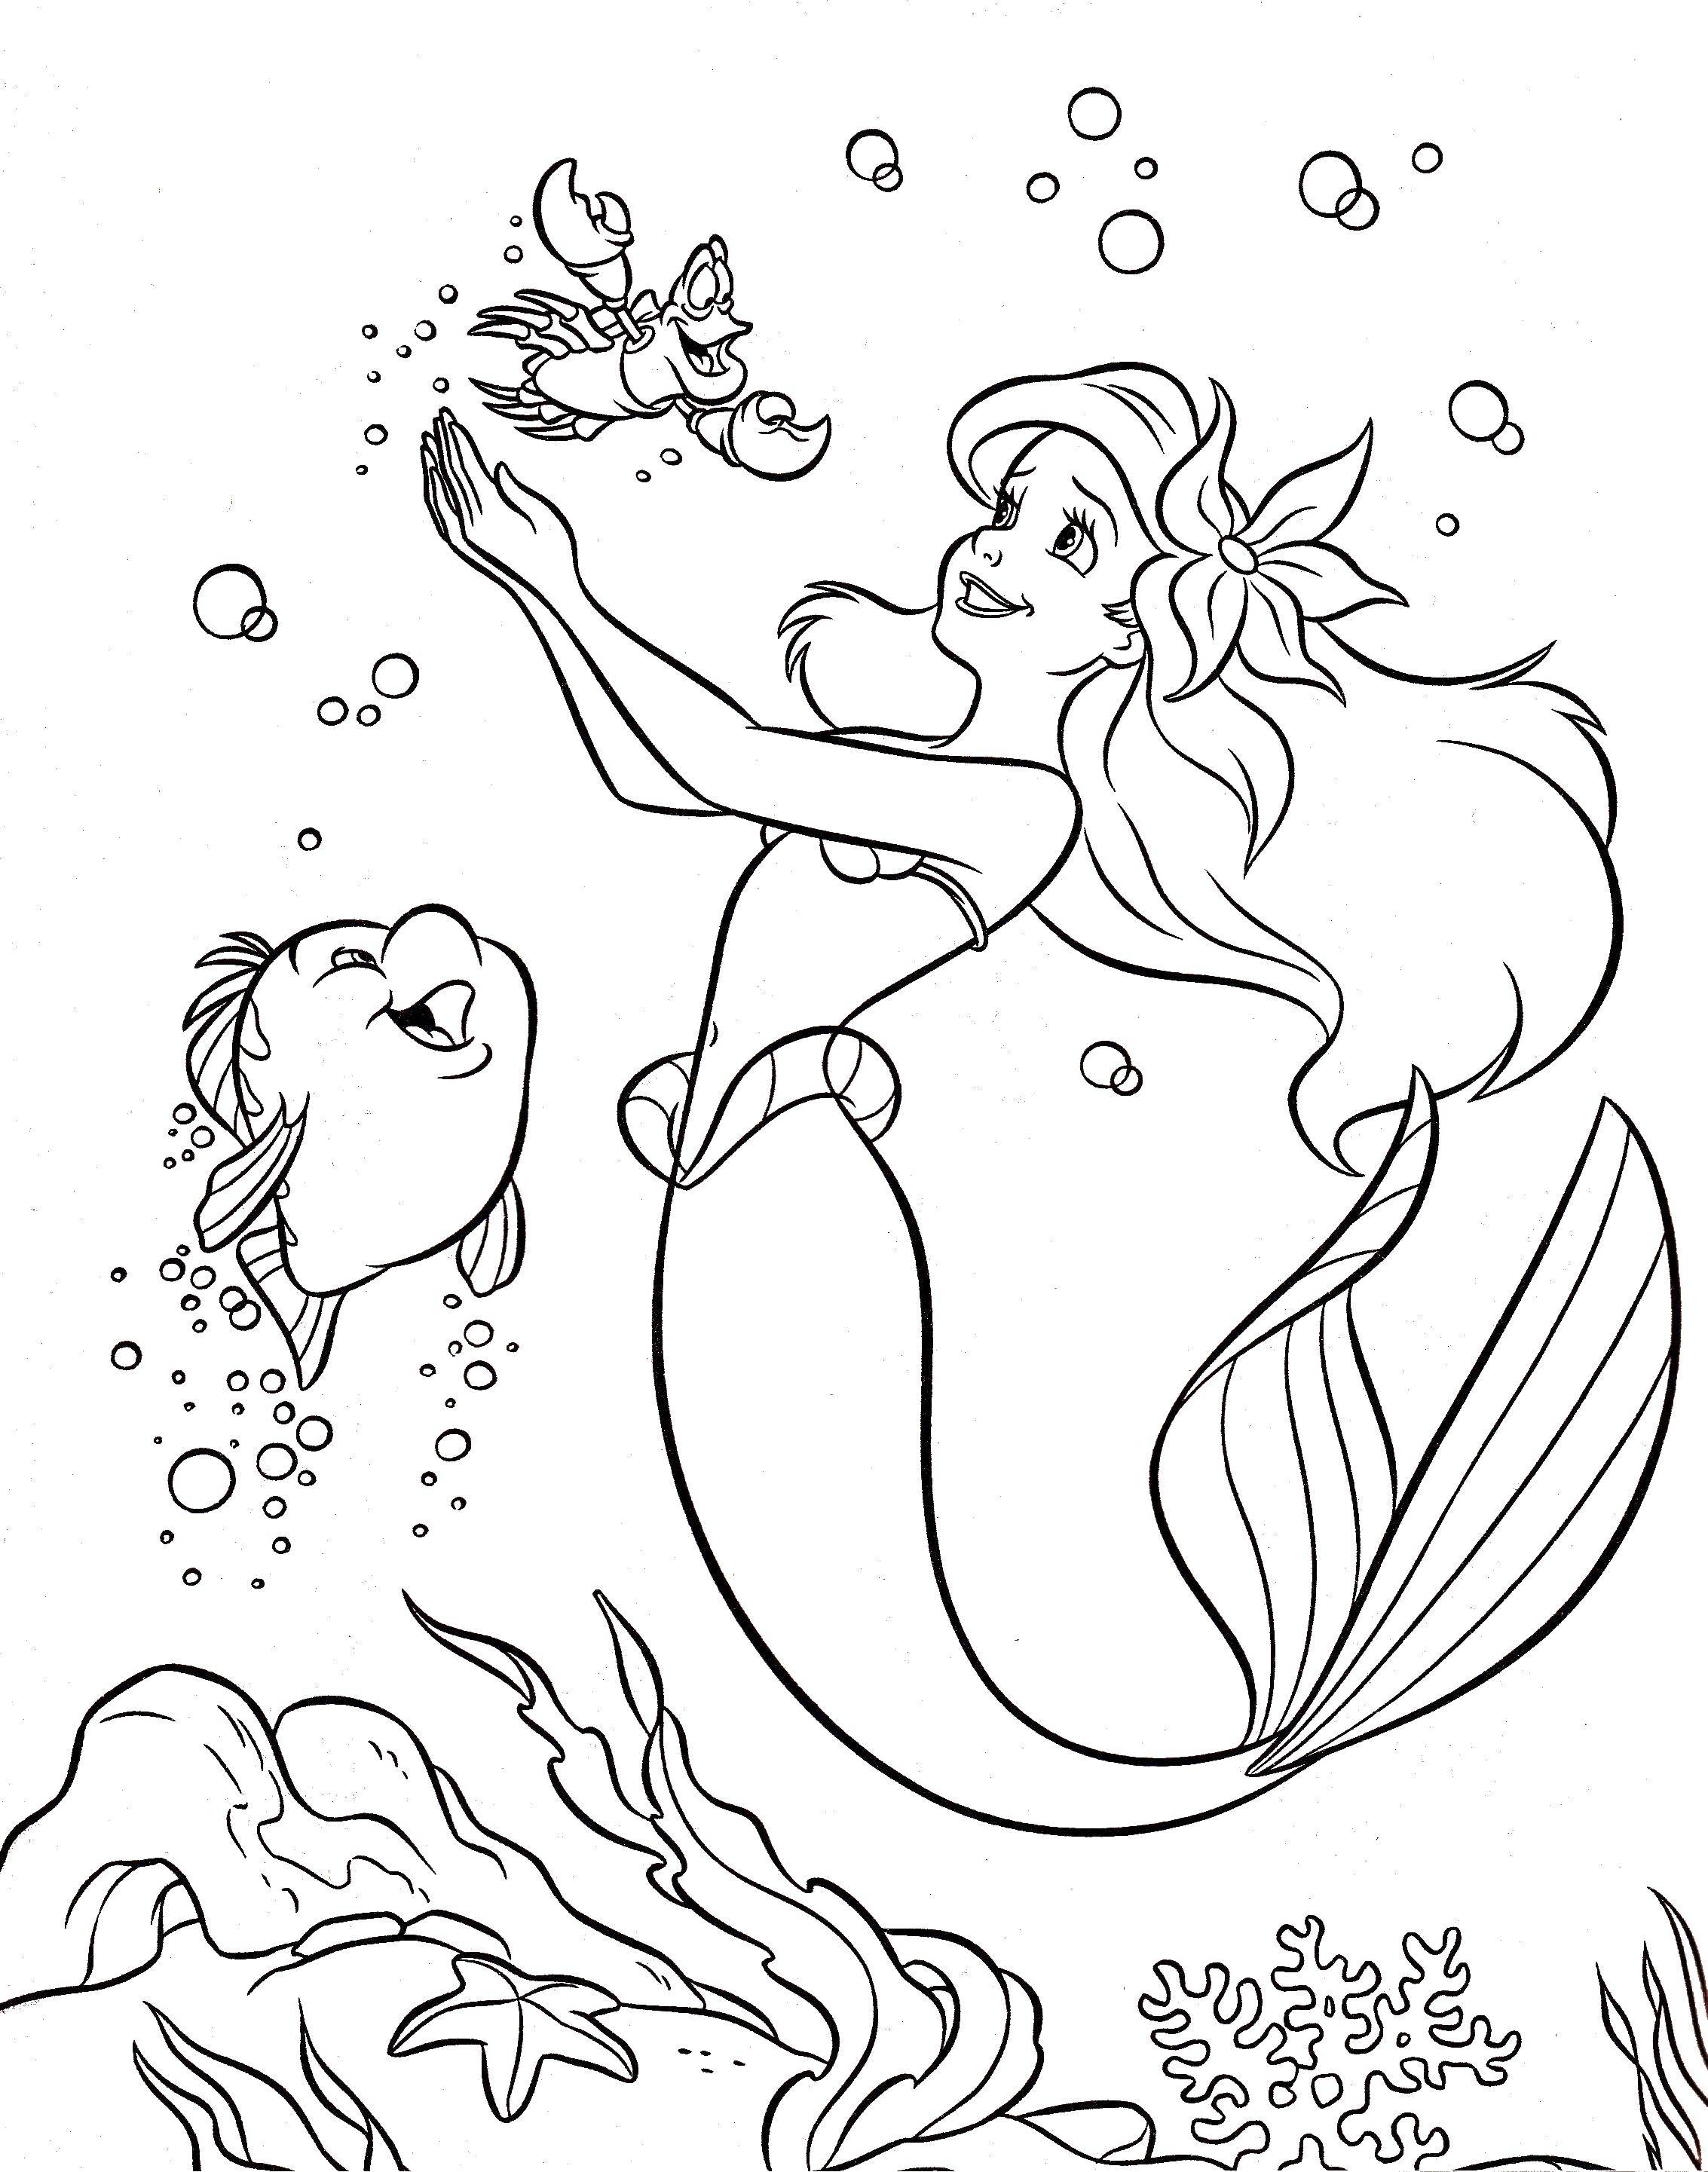 Coloring Ariel having fun with friends. Category Disney cartoons. Tags:  Disney, the little mermaid, Ariel.